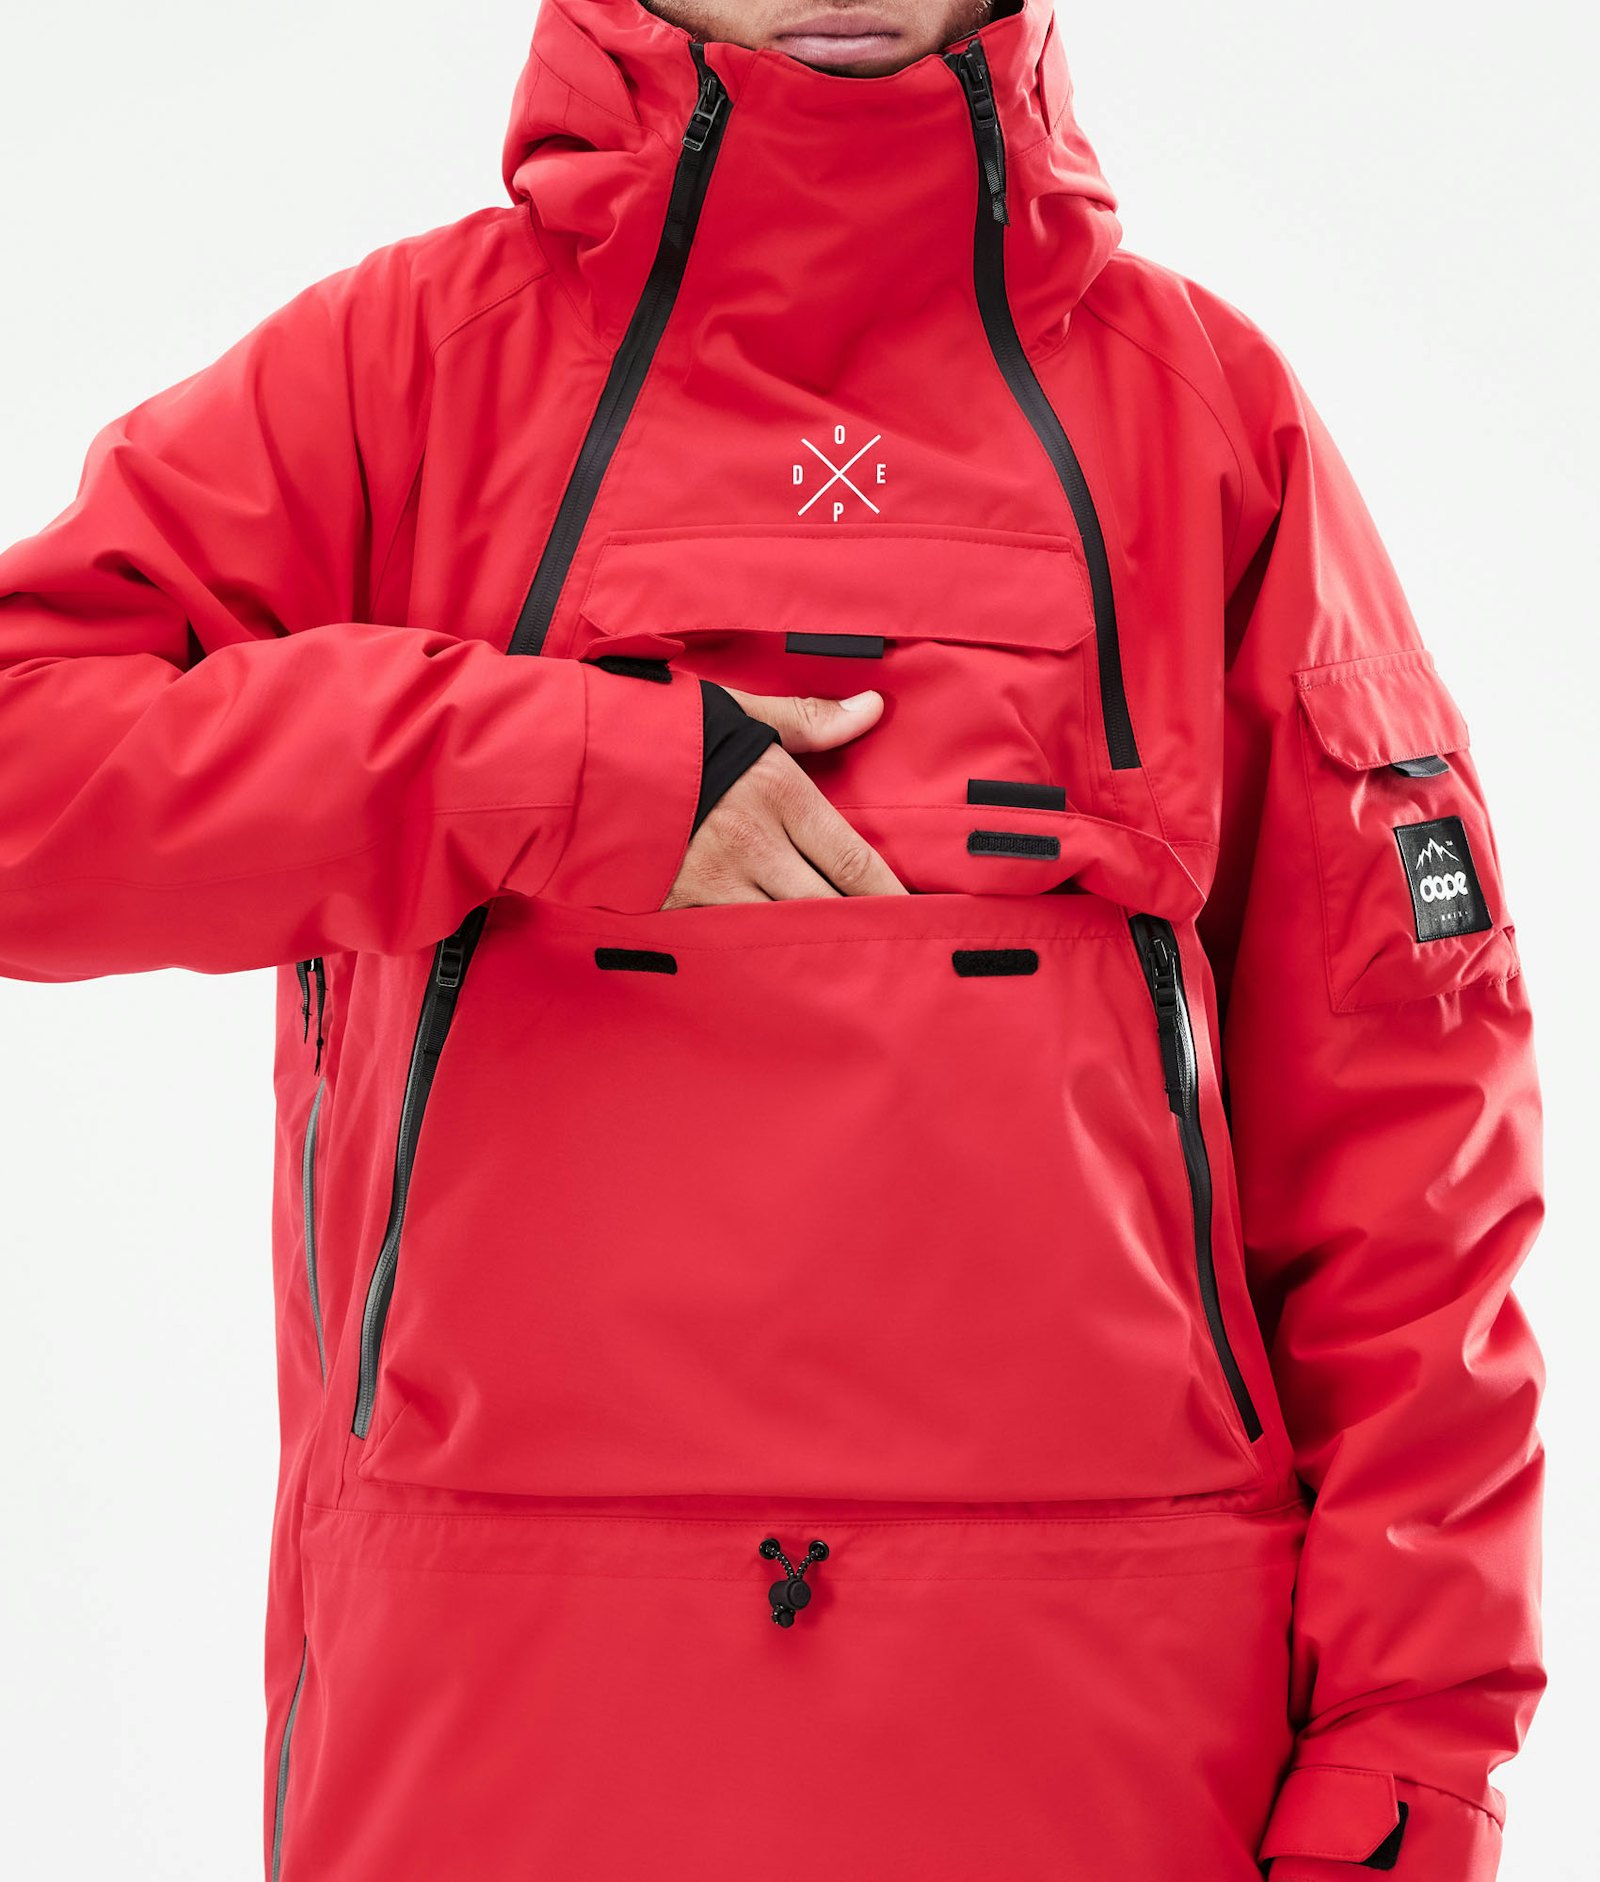 Akin 2020 Veste Snowboard Homme Red